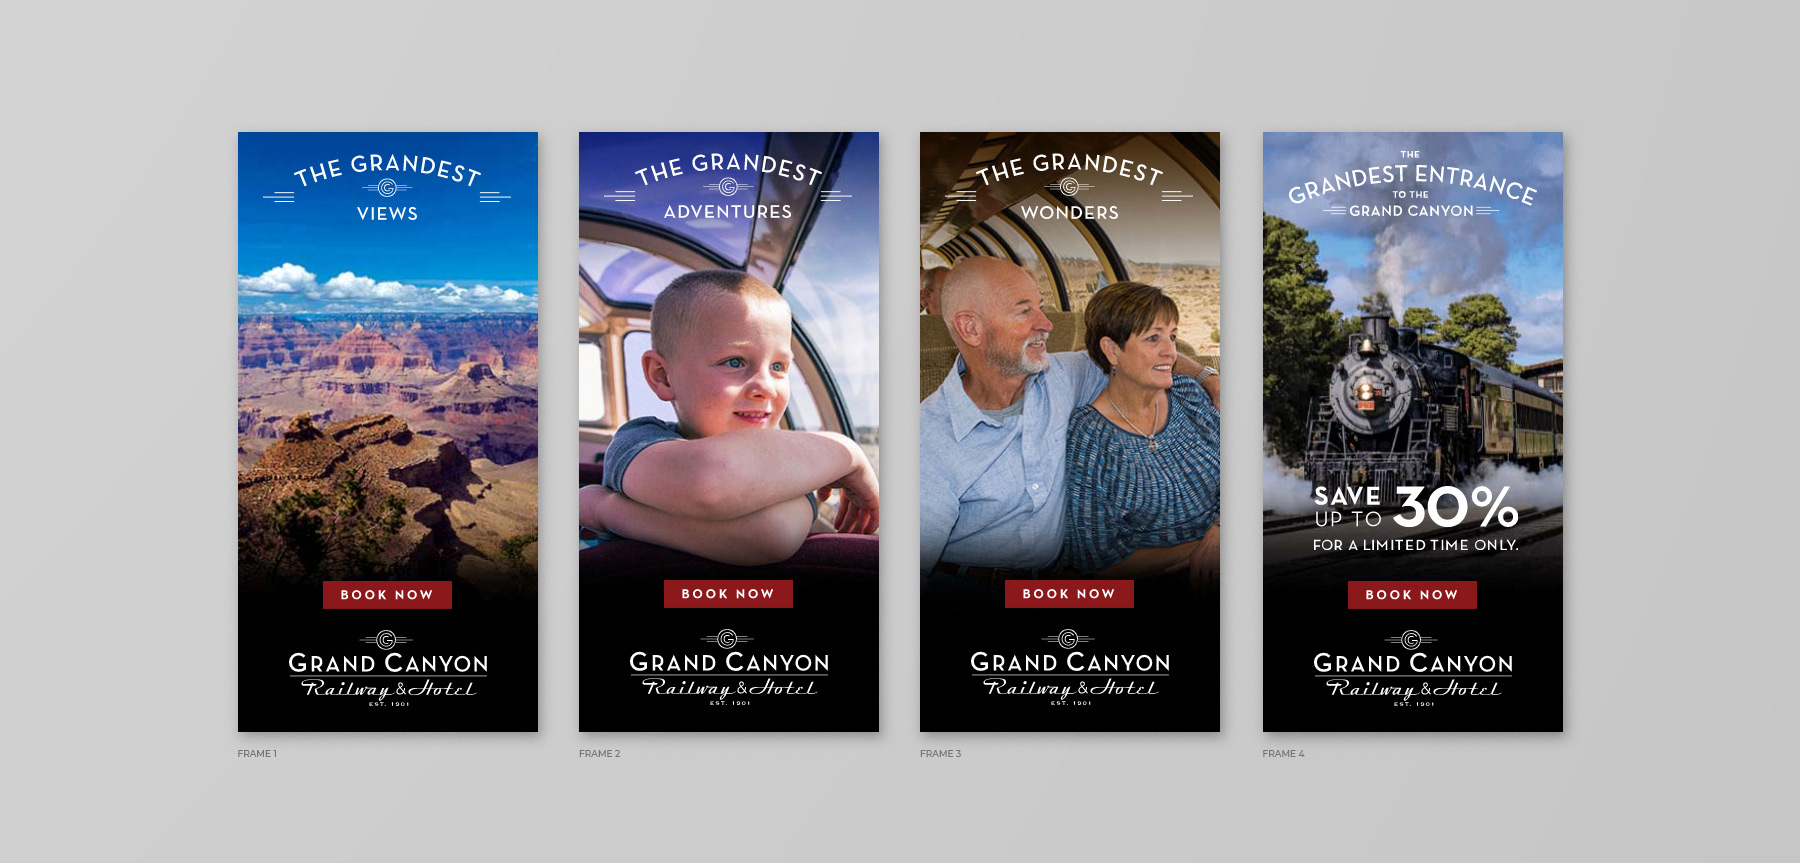 Grand Canyon Railway Banners